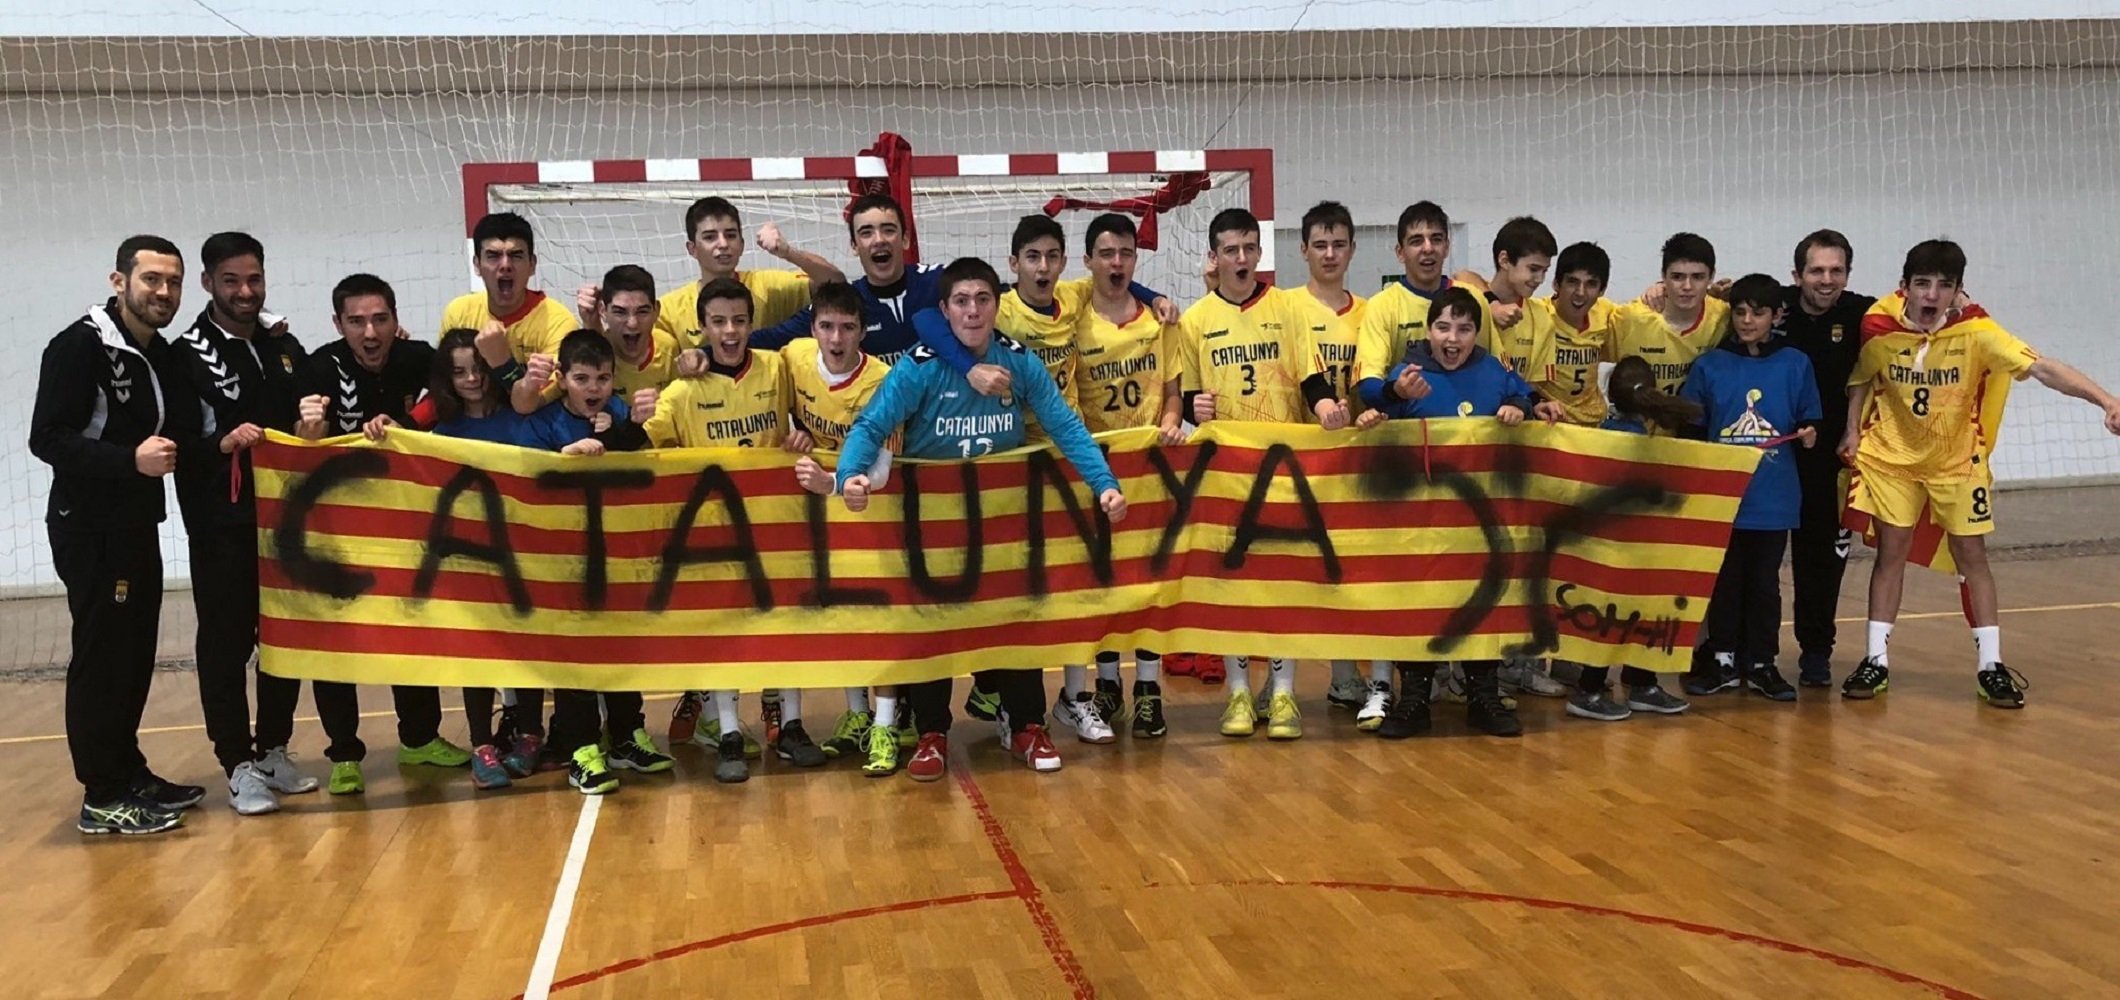 Catalunya es banya en or al Campionat de seleccions a Valladolid